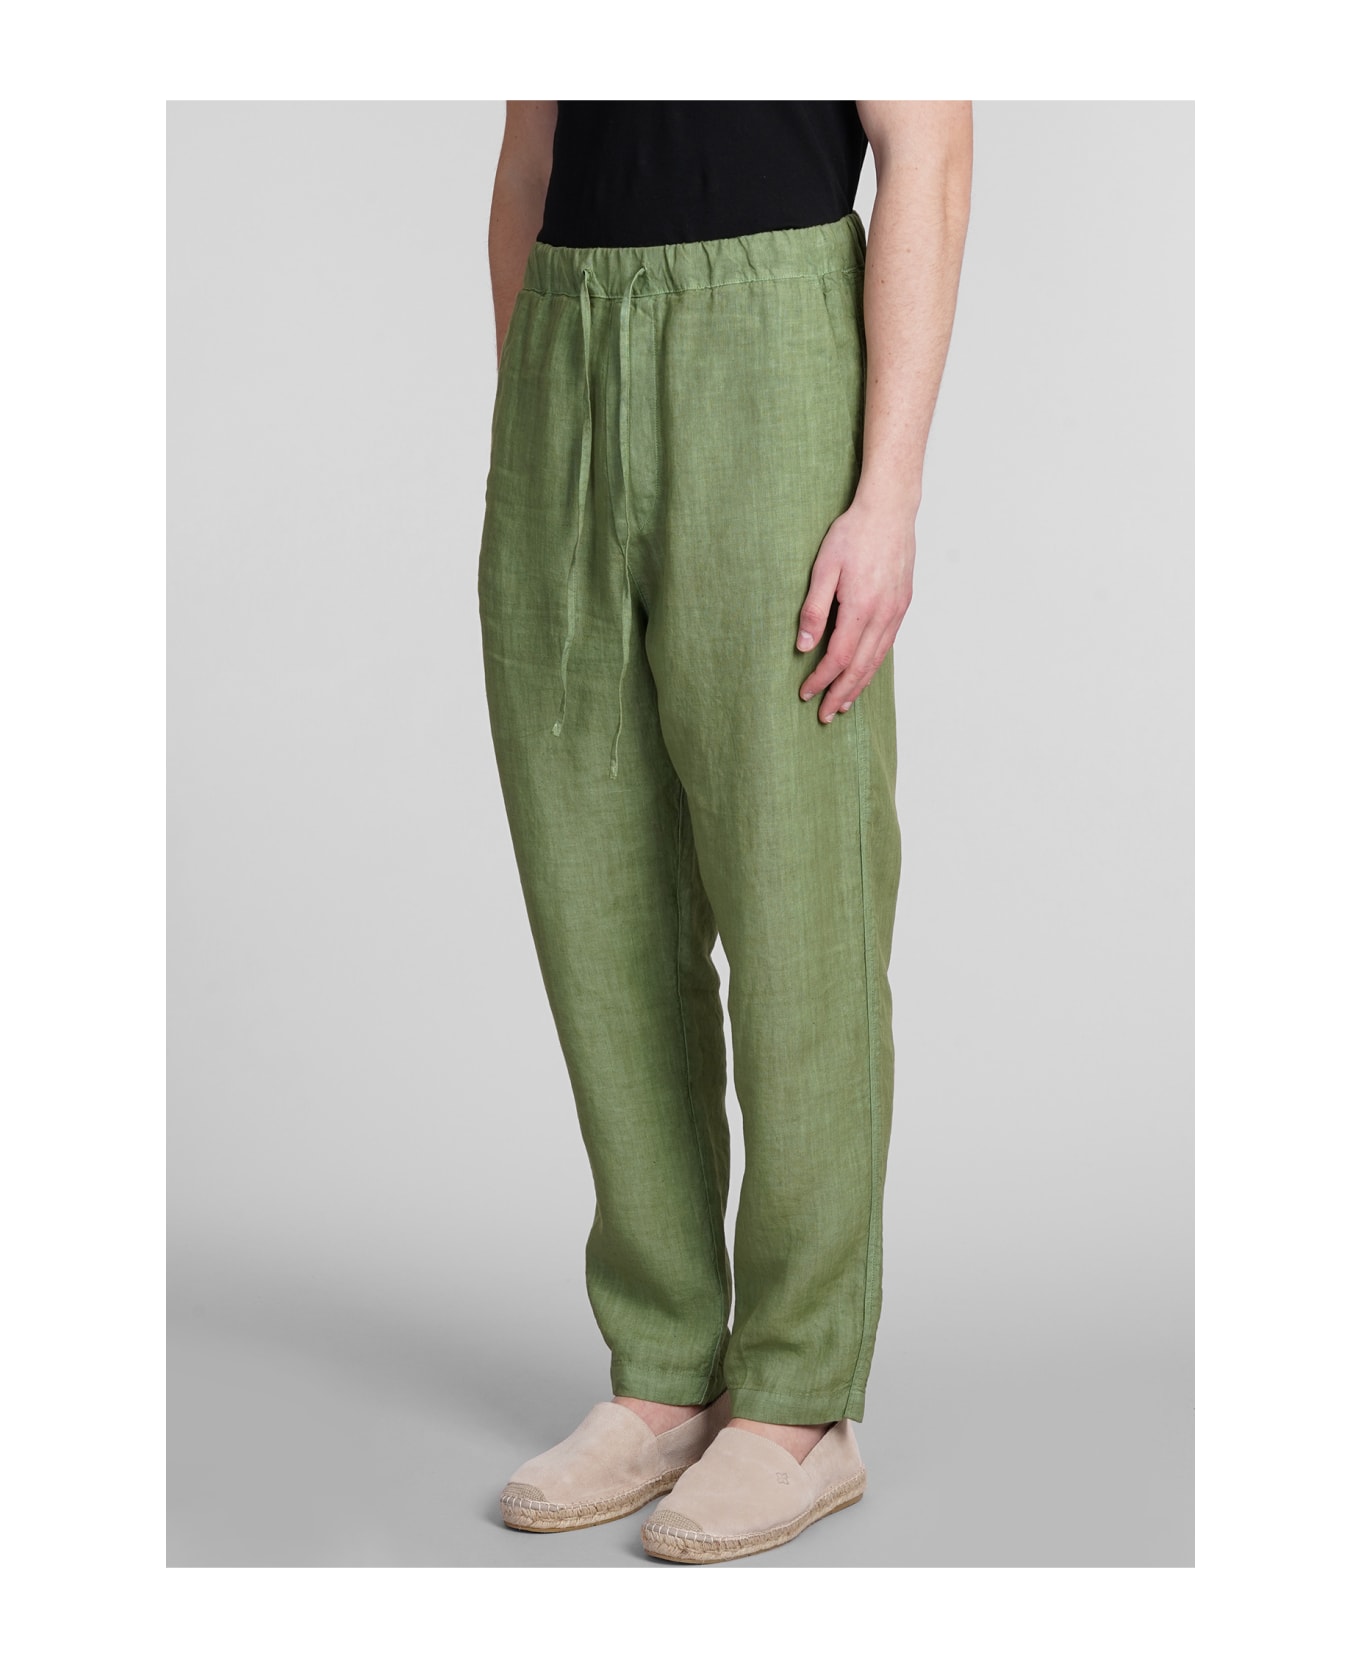 120% Lino Pants In Green Linen - Medium green soft